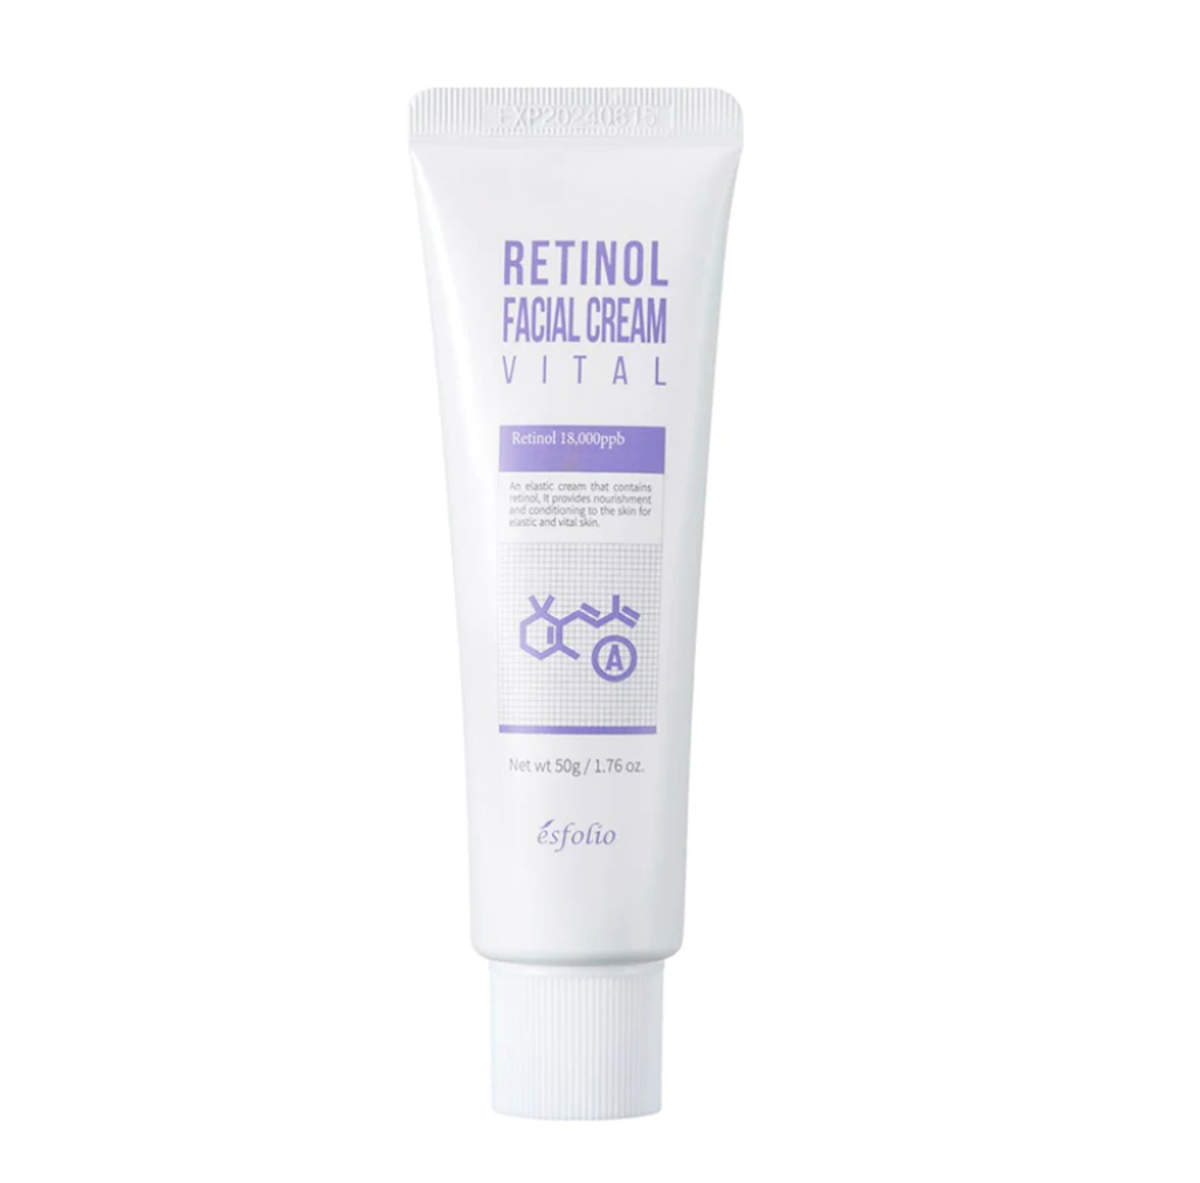 Retinol facial cream Vital